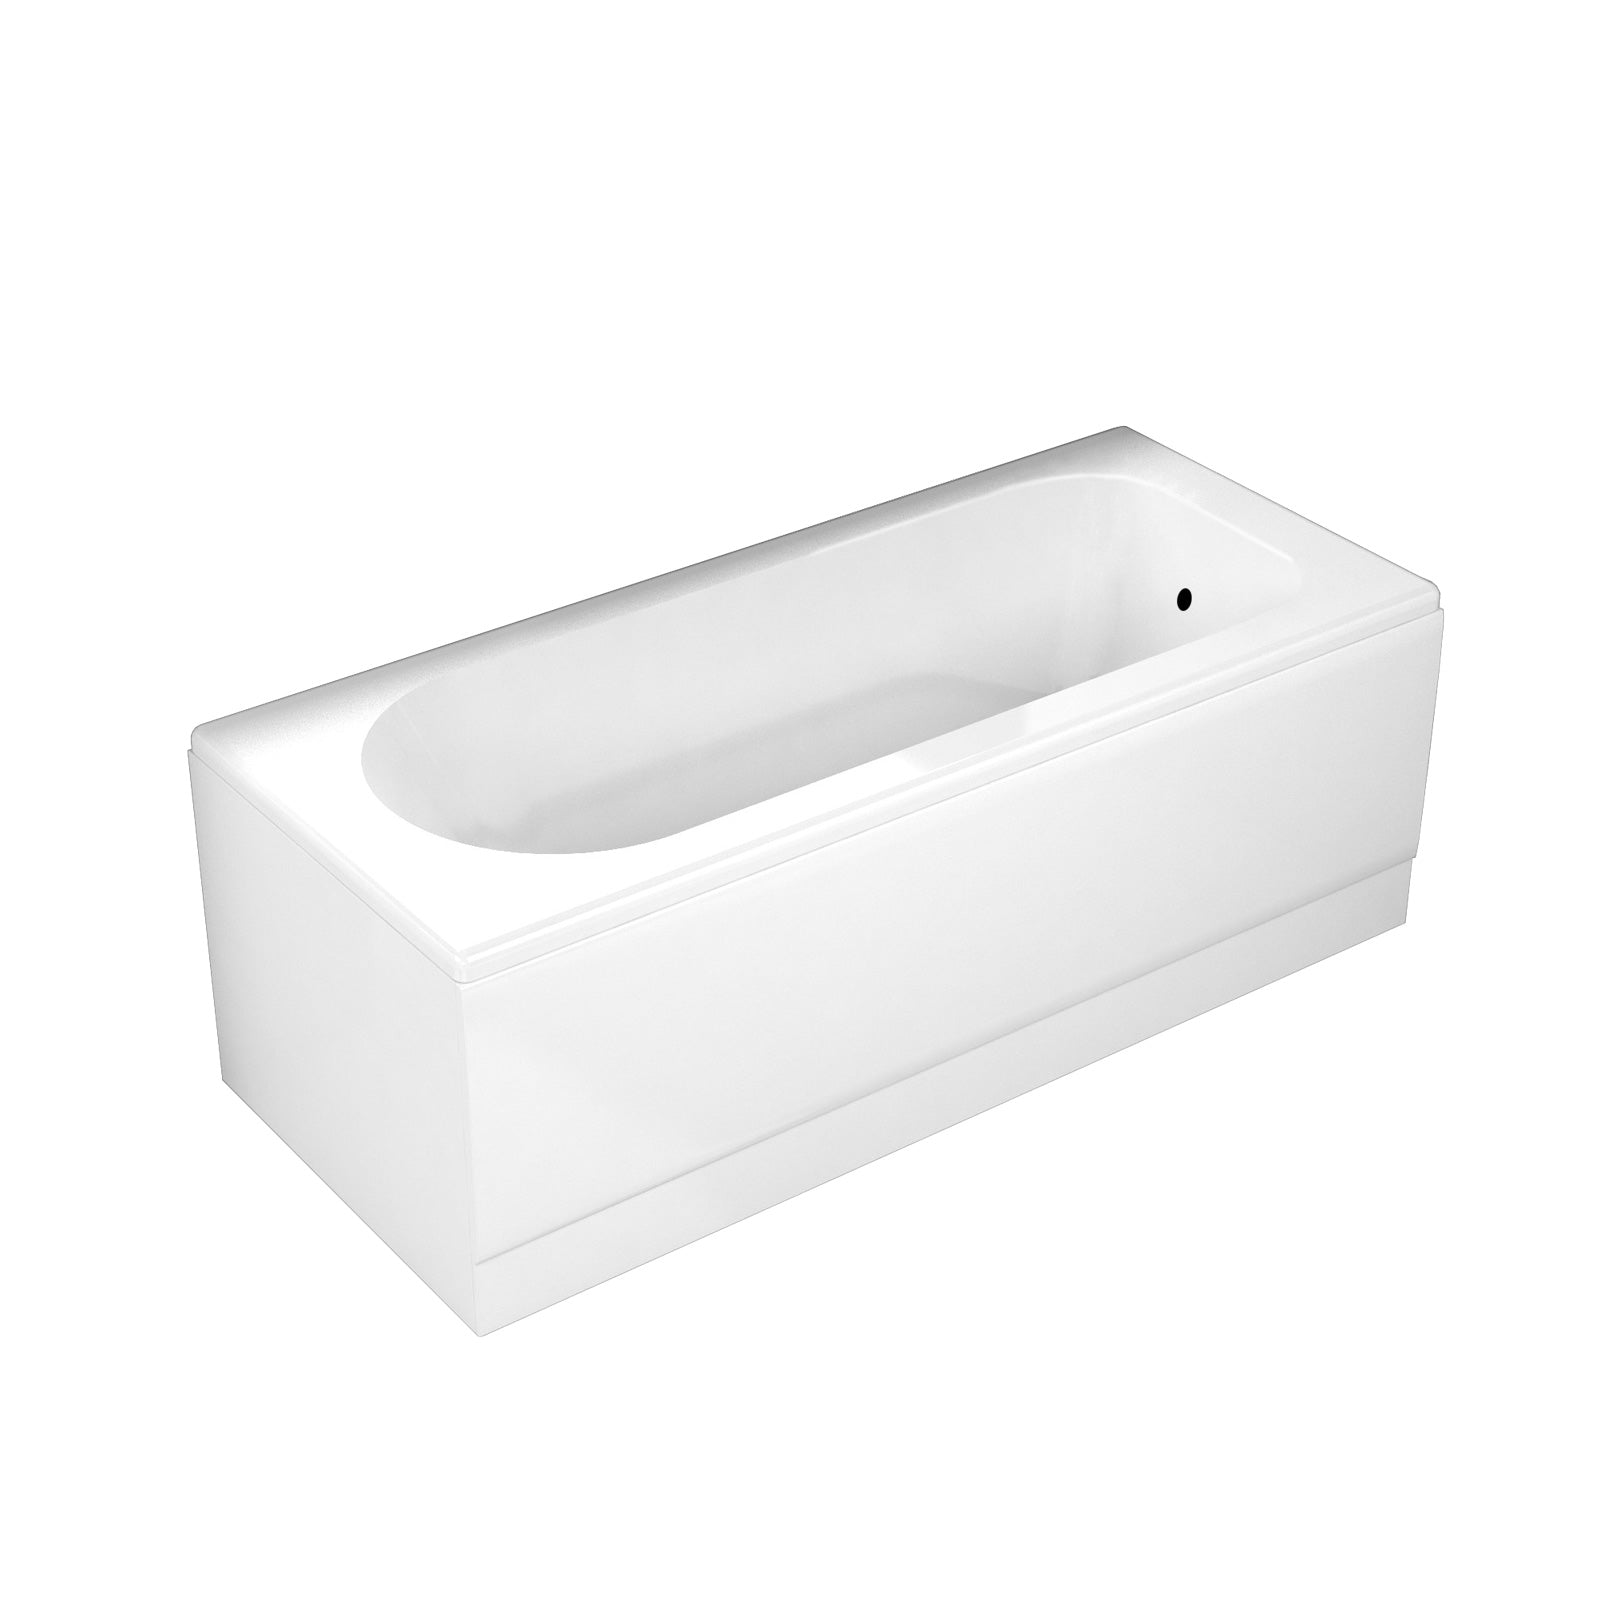 Nanuya 1700mm Bath, WC Toilet & 600 mm White Vanity Basin Cabinet